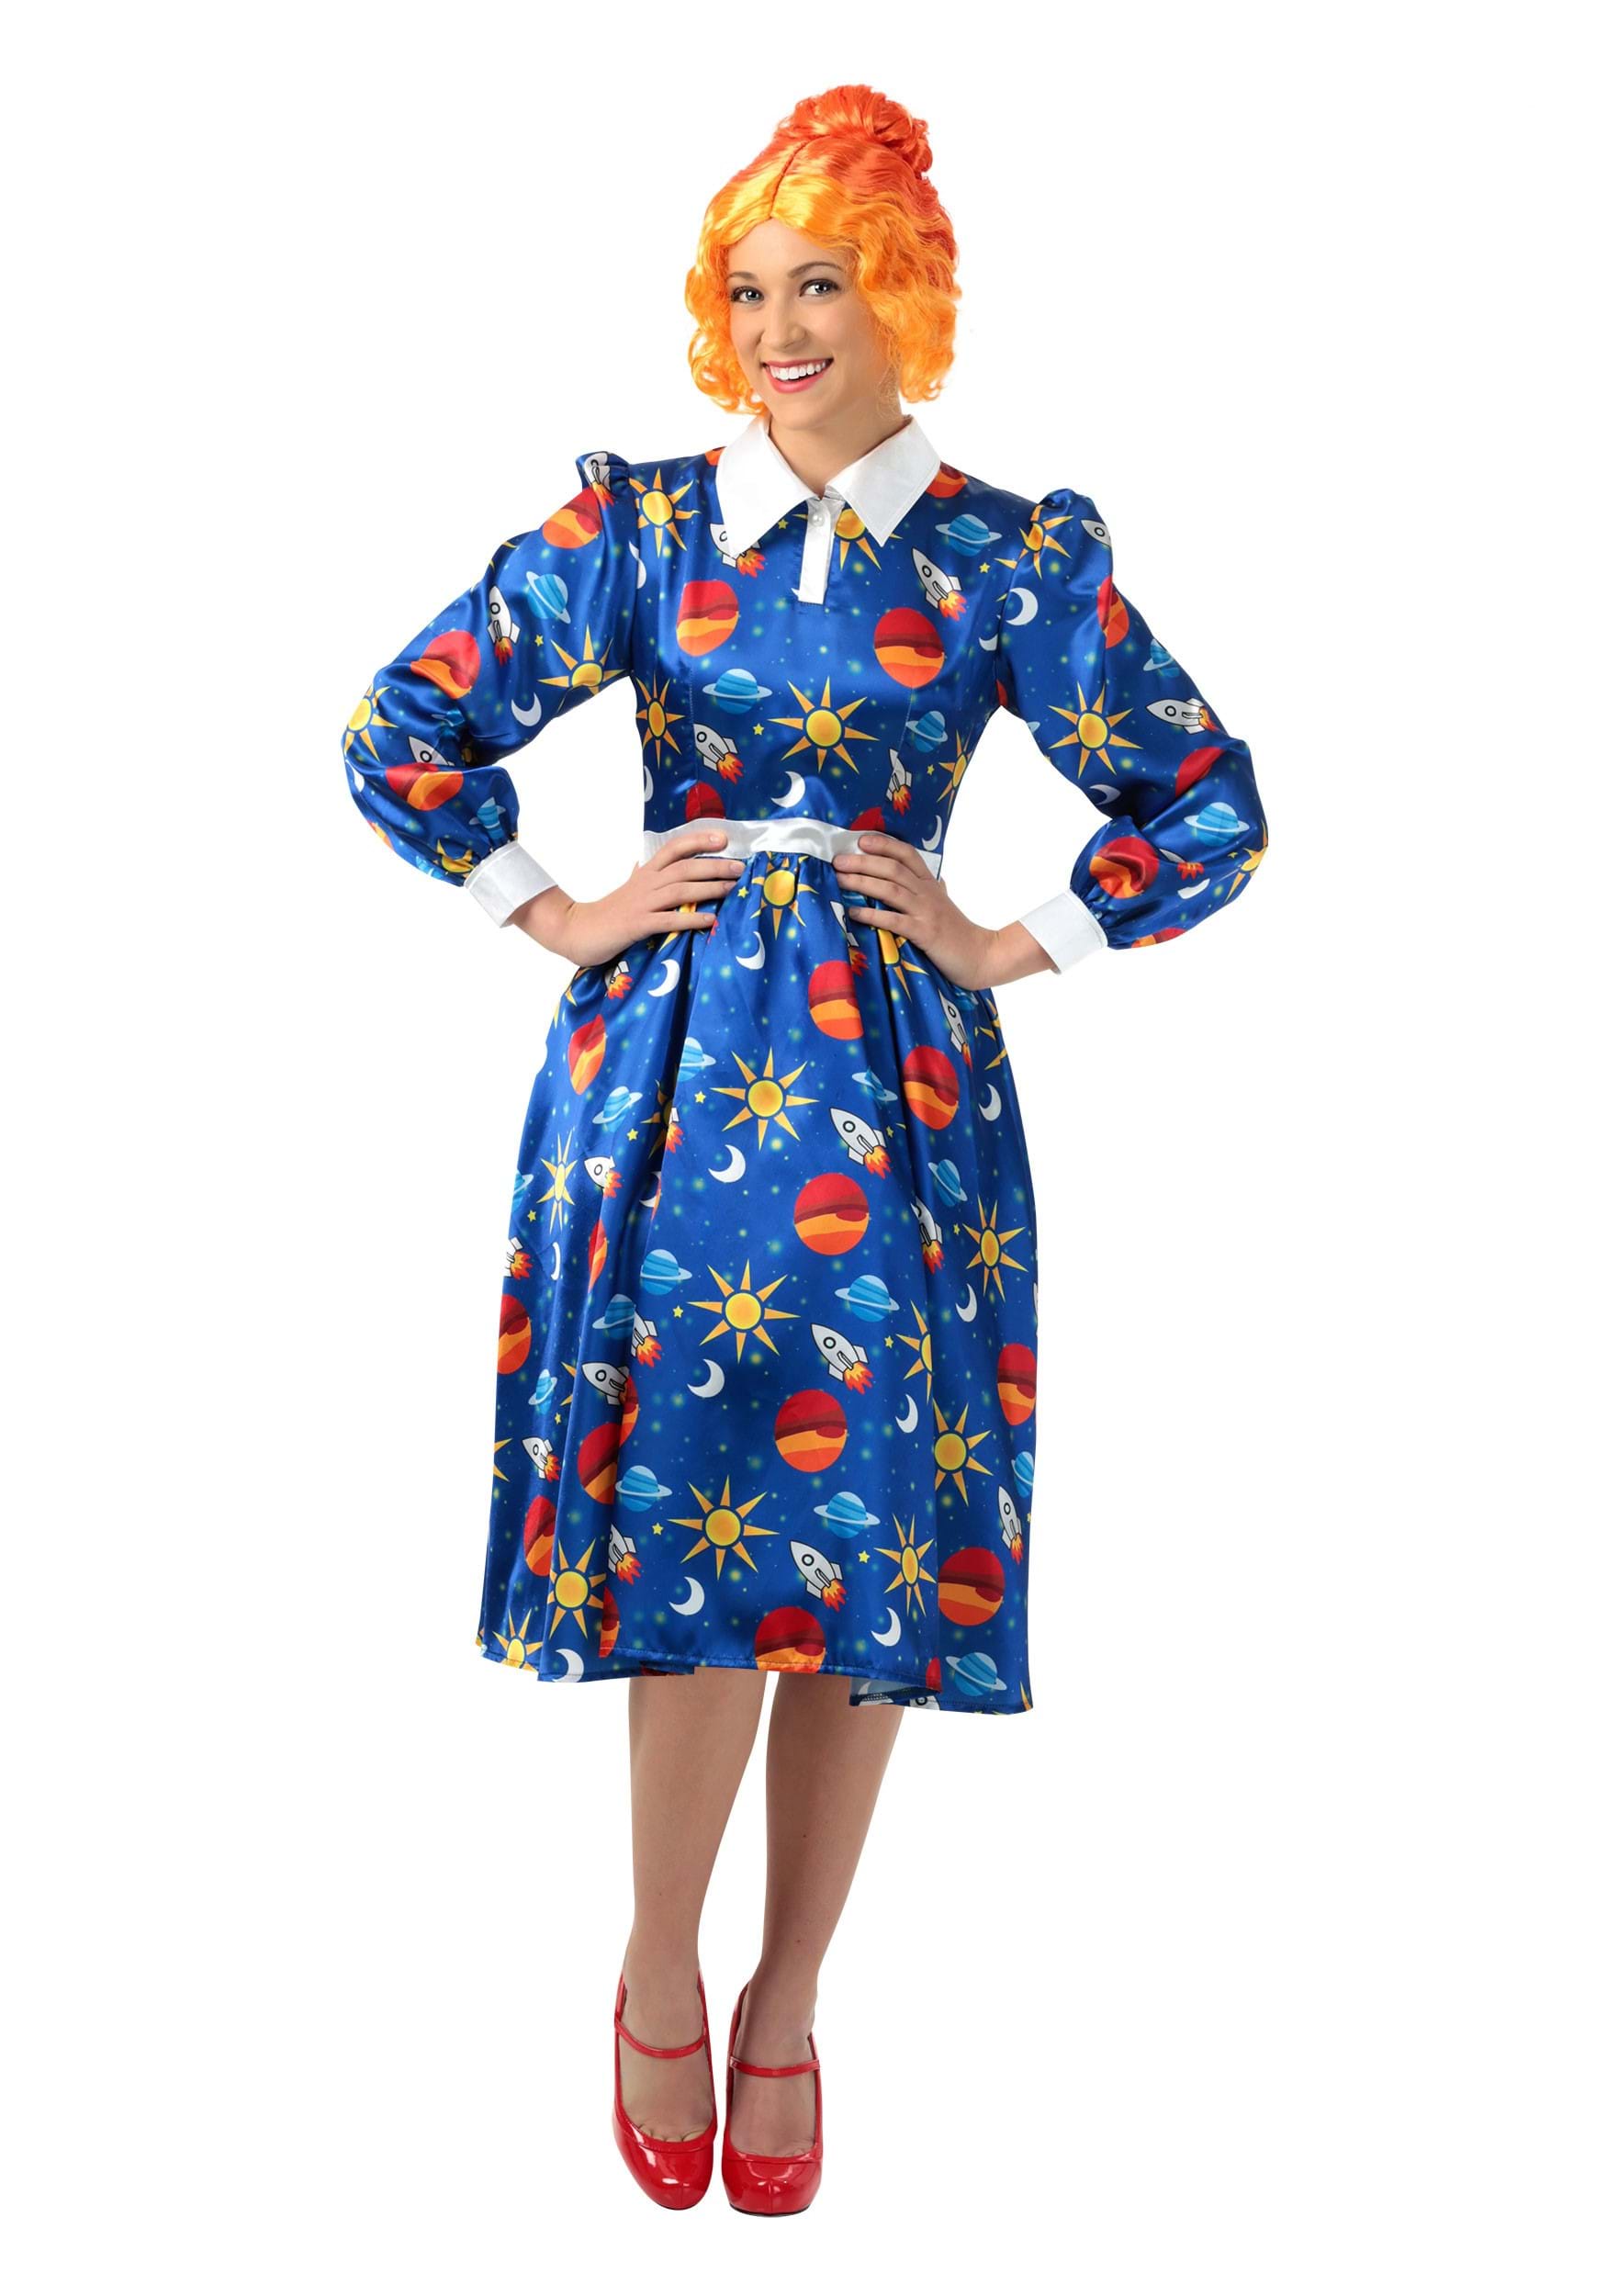 Photos - Fancy Dress FUN Costumes Magic School Bus Miss Frizzle Costume for Women Blue FUN6350A